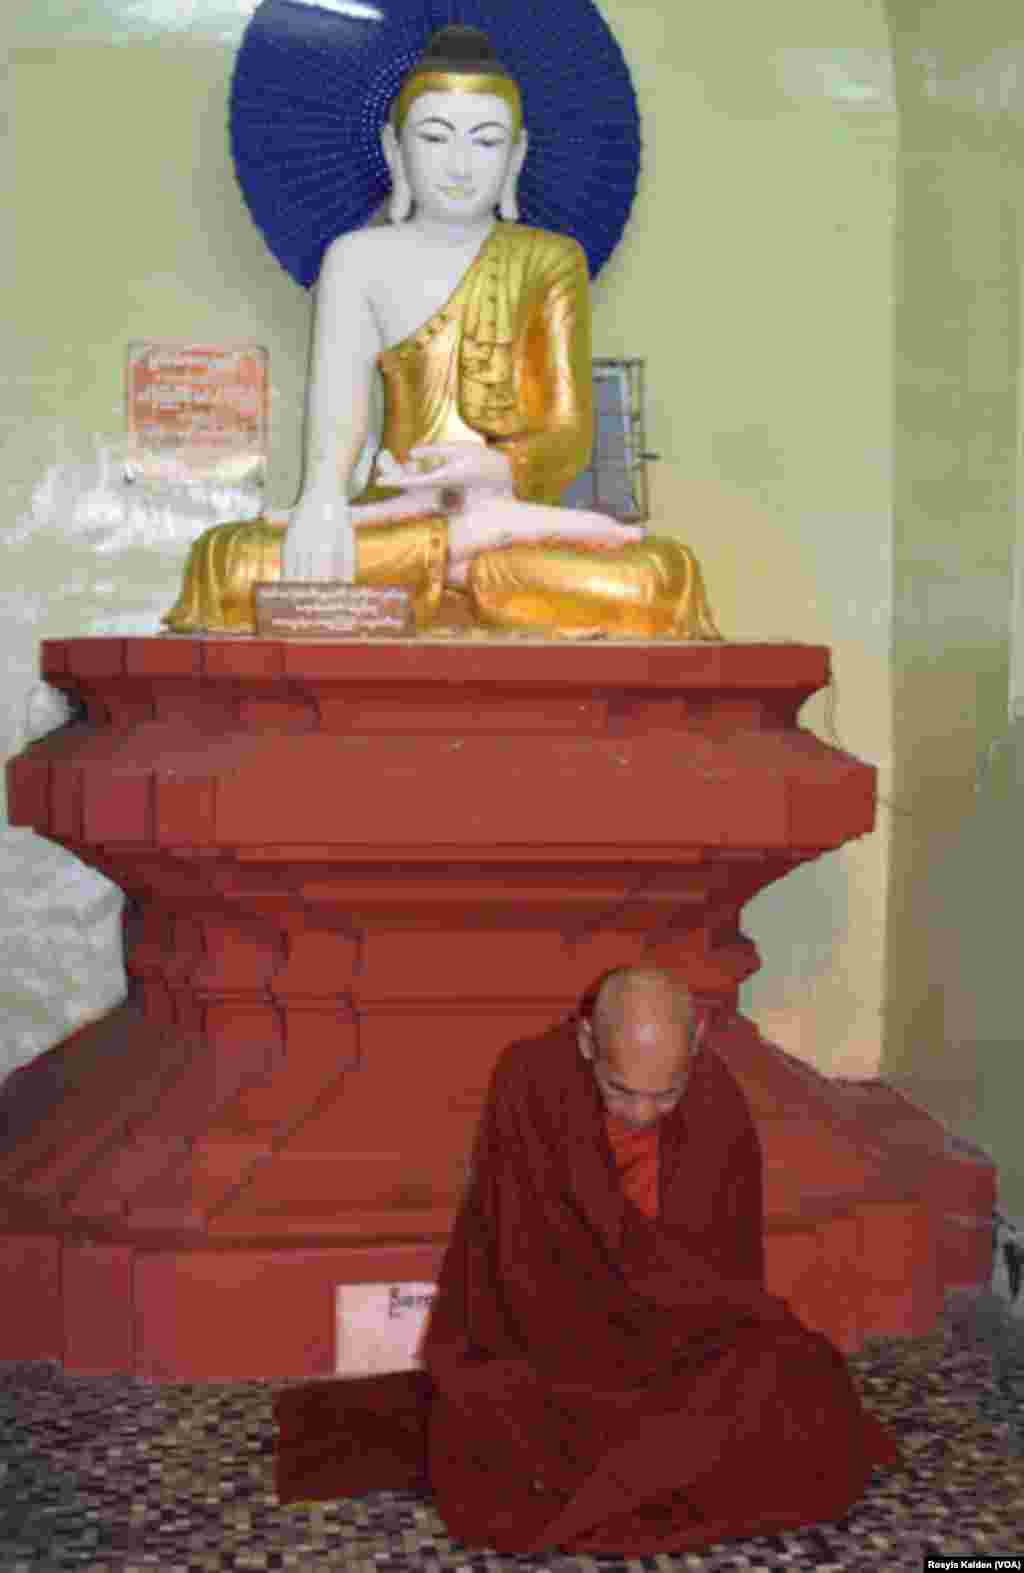 A monk mediates at the Shwedagon Pagoda in Yangon, Myanmar, Nov. 10, 2015.